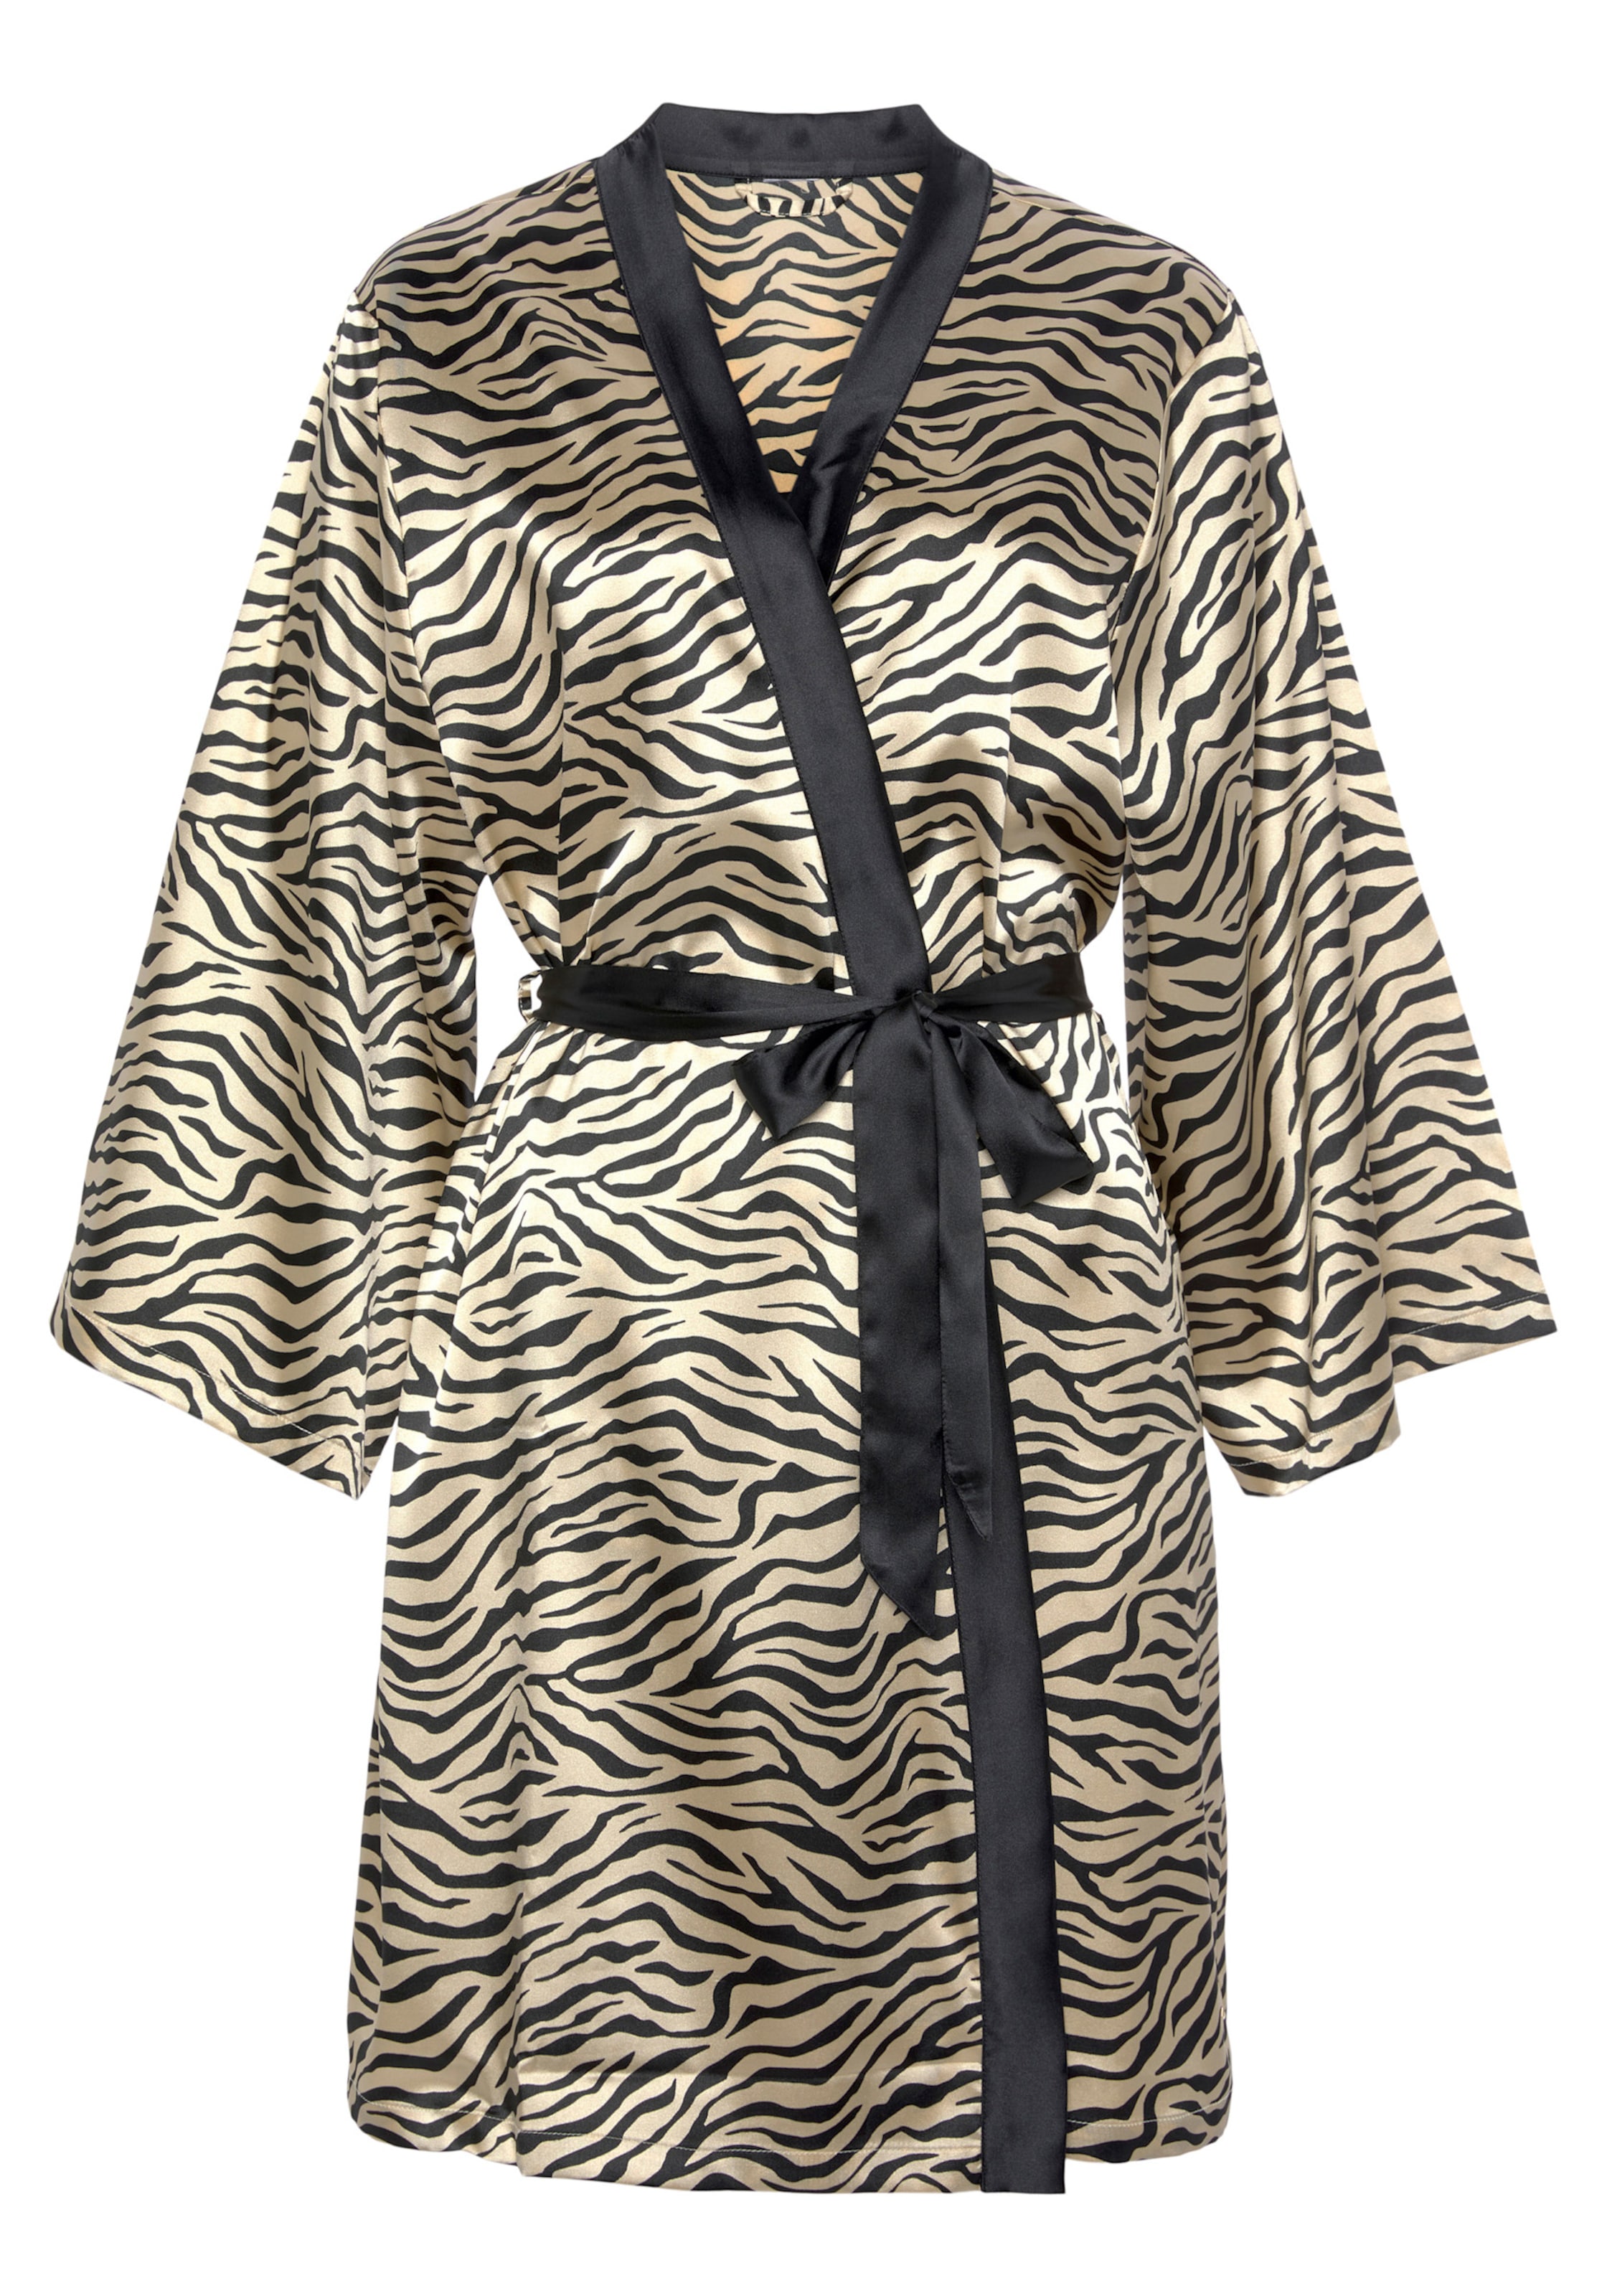 von Kim günstig Kaufen-Kimono in tiger-print von Buffalo. Kimono in tiger-print von Buffalo <![CDATA[Kimono mit Kontrast Taillenband. Angenehme Satin-Polyesterqualität. Aus 95% Polyester, 5% Elasthan.]]>. 